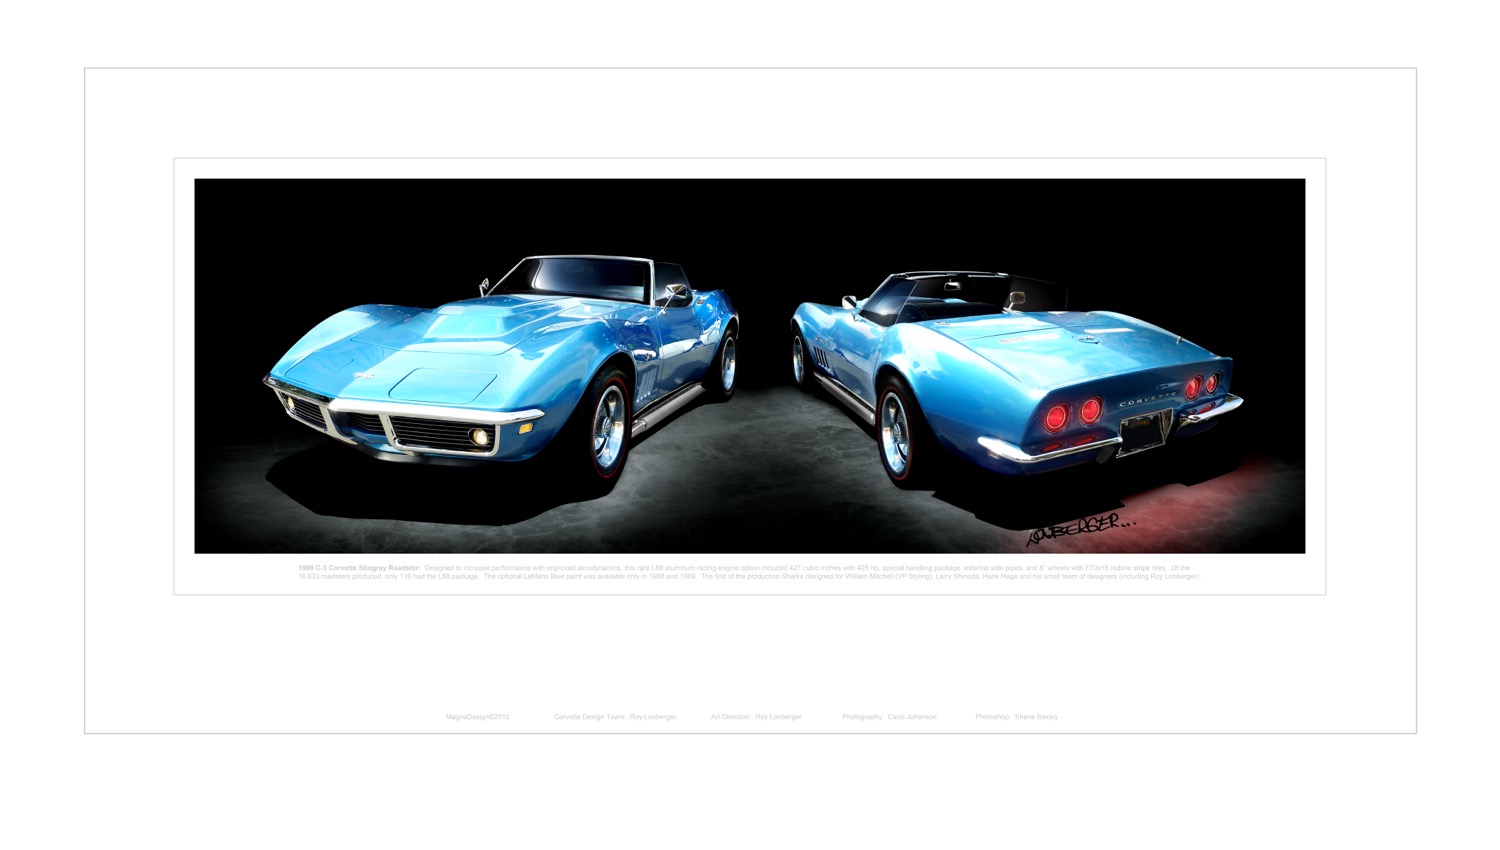 13-Corvette 1969-C3-Blue-Wall Poster-LowRez.jpg